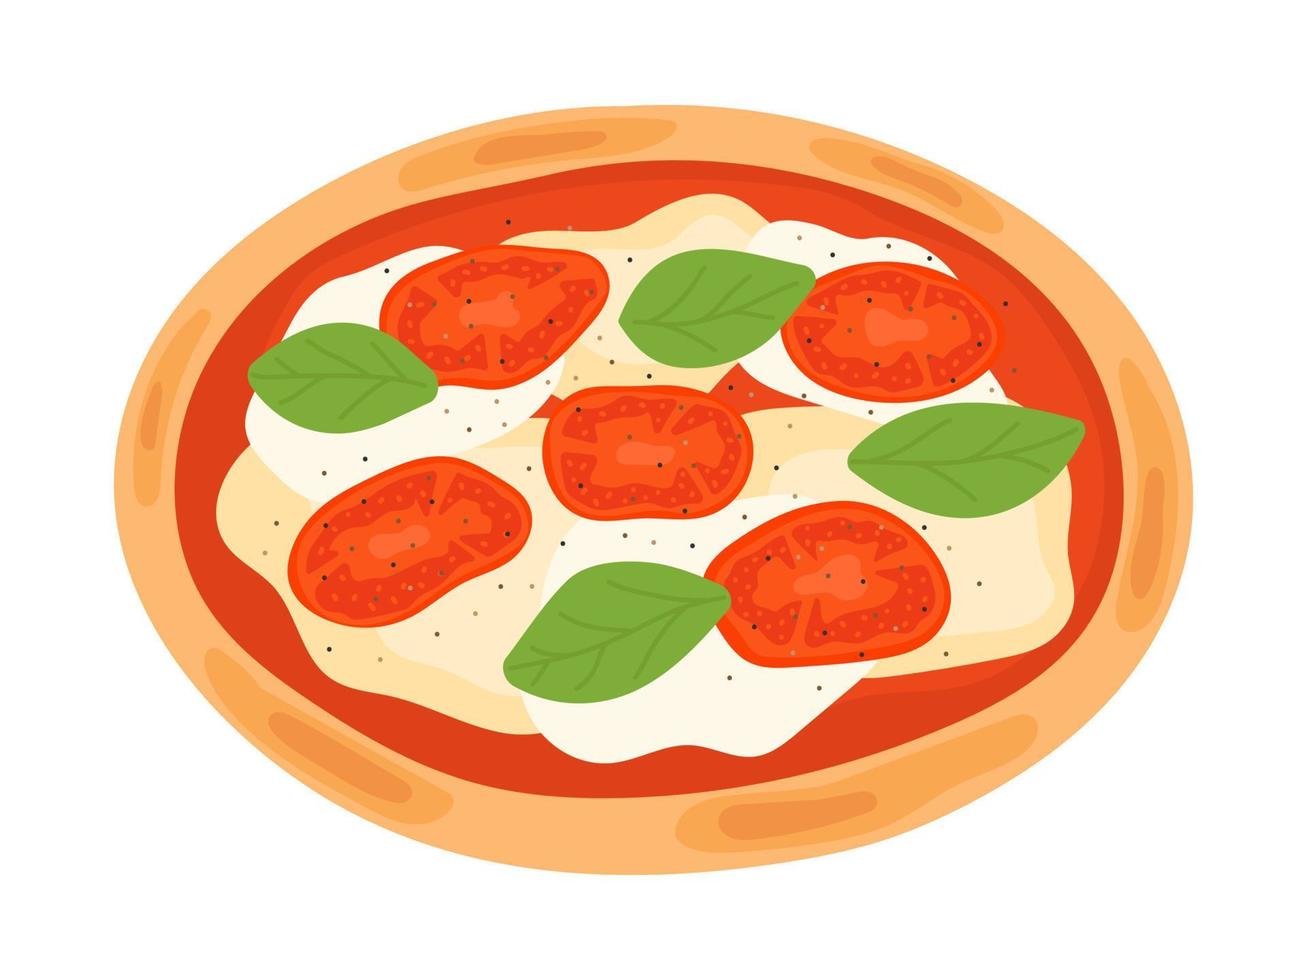 Italienische traditionelle Pizza mit Mozzarella, Tomaten, Basilikum. Vektor-Illustration von Lebensmitteln. vektor